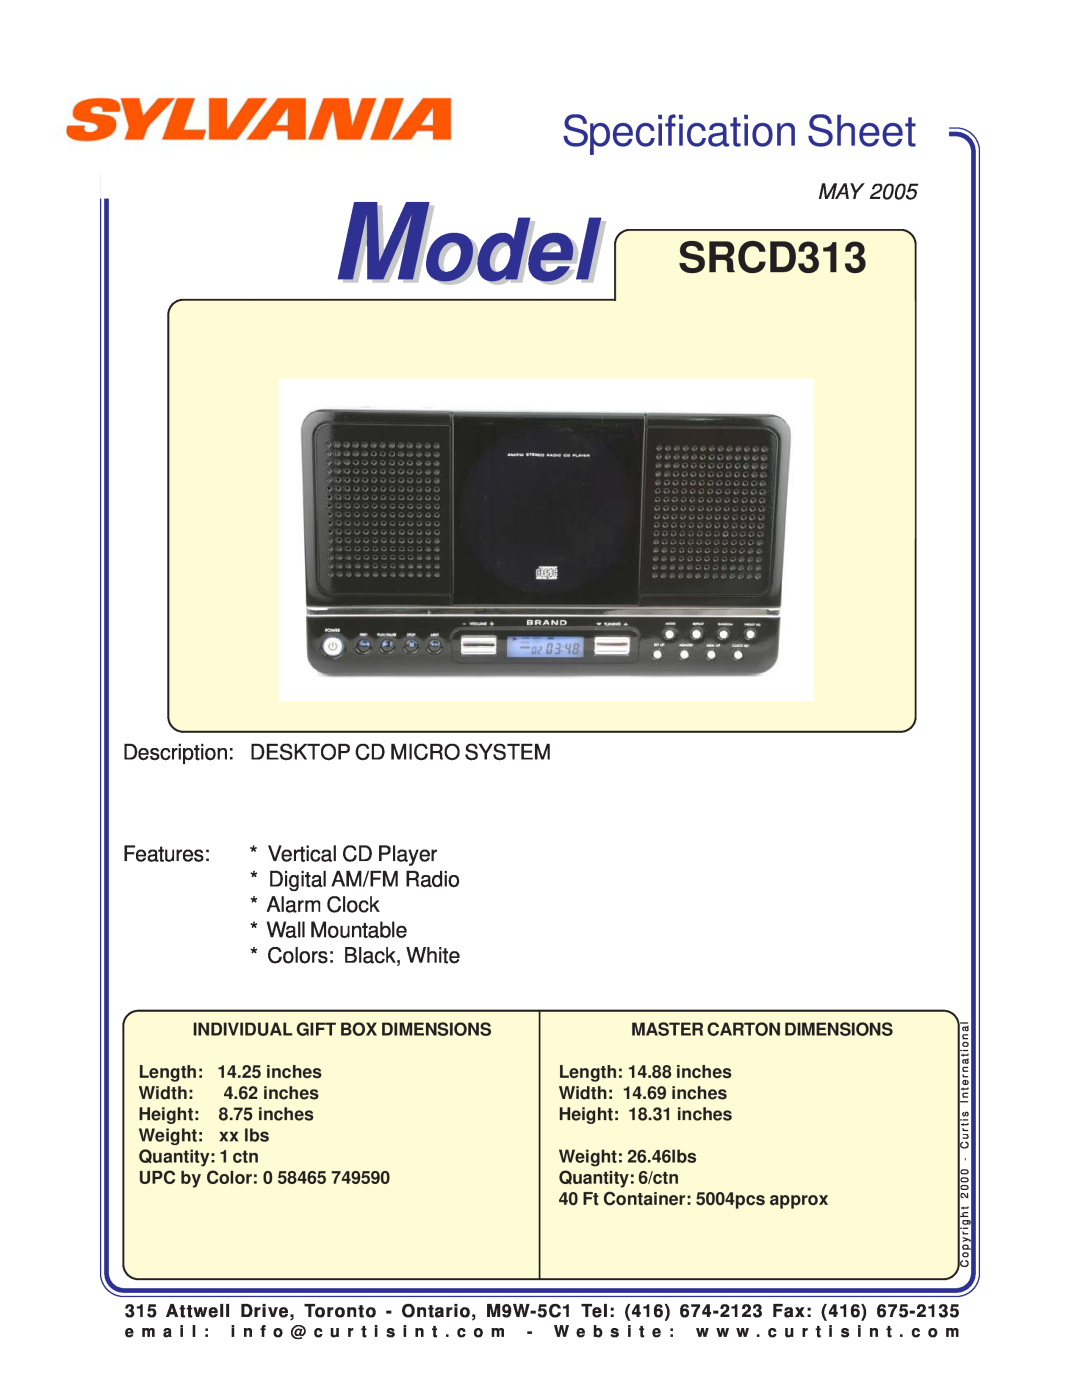 Sylvania specifications Specification Sheet, Model SRCD313, Place Image Here, Description DESKTOP CD MICRO SYSTEM 